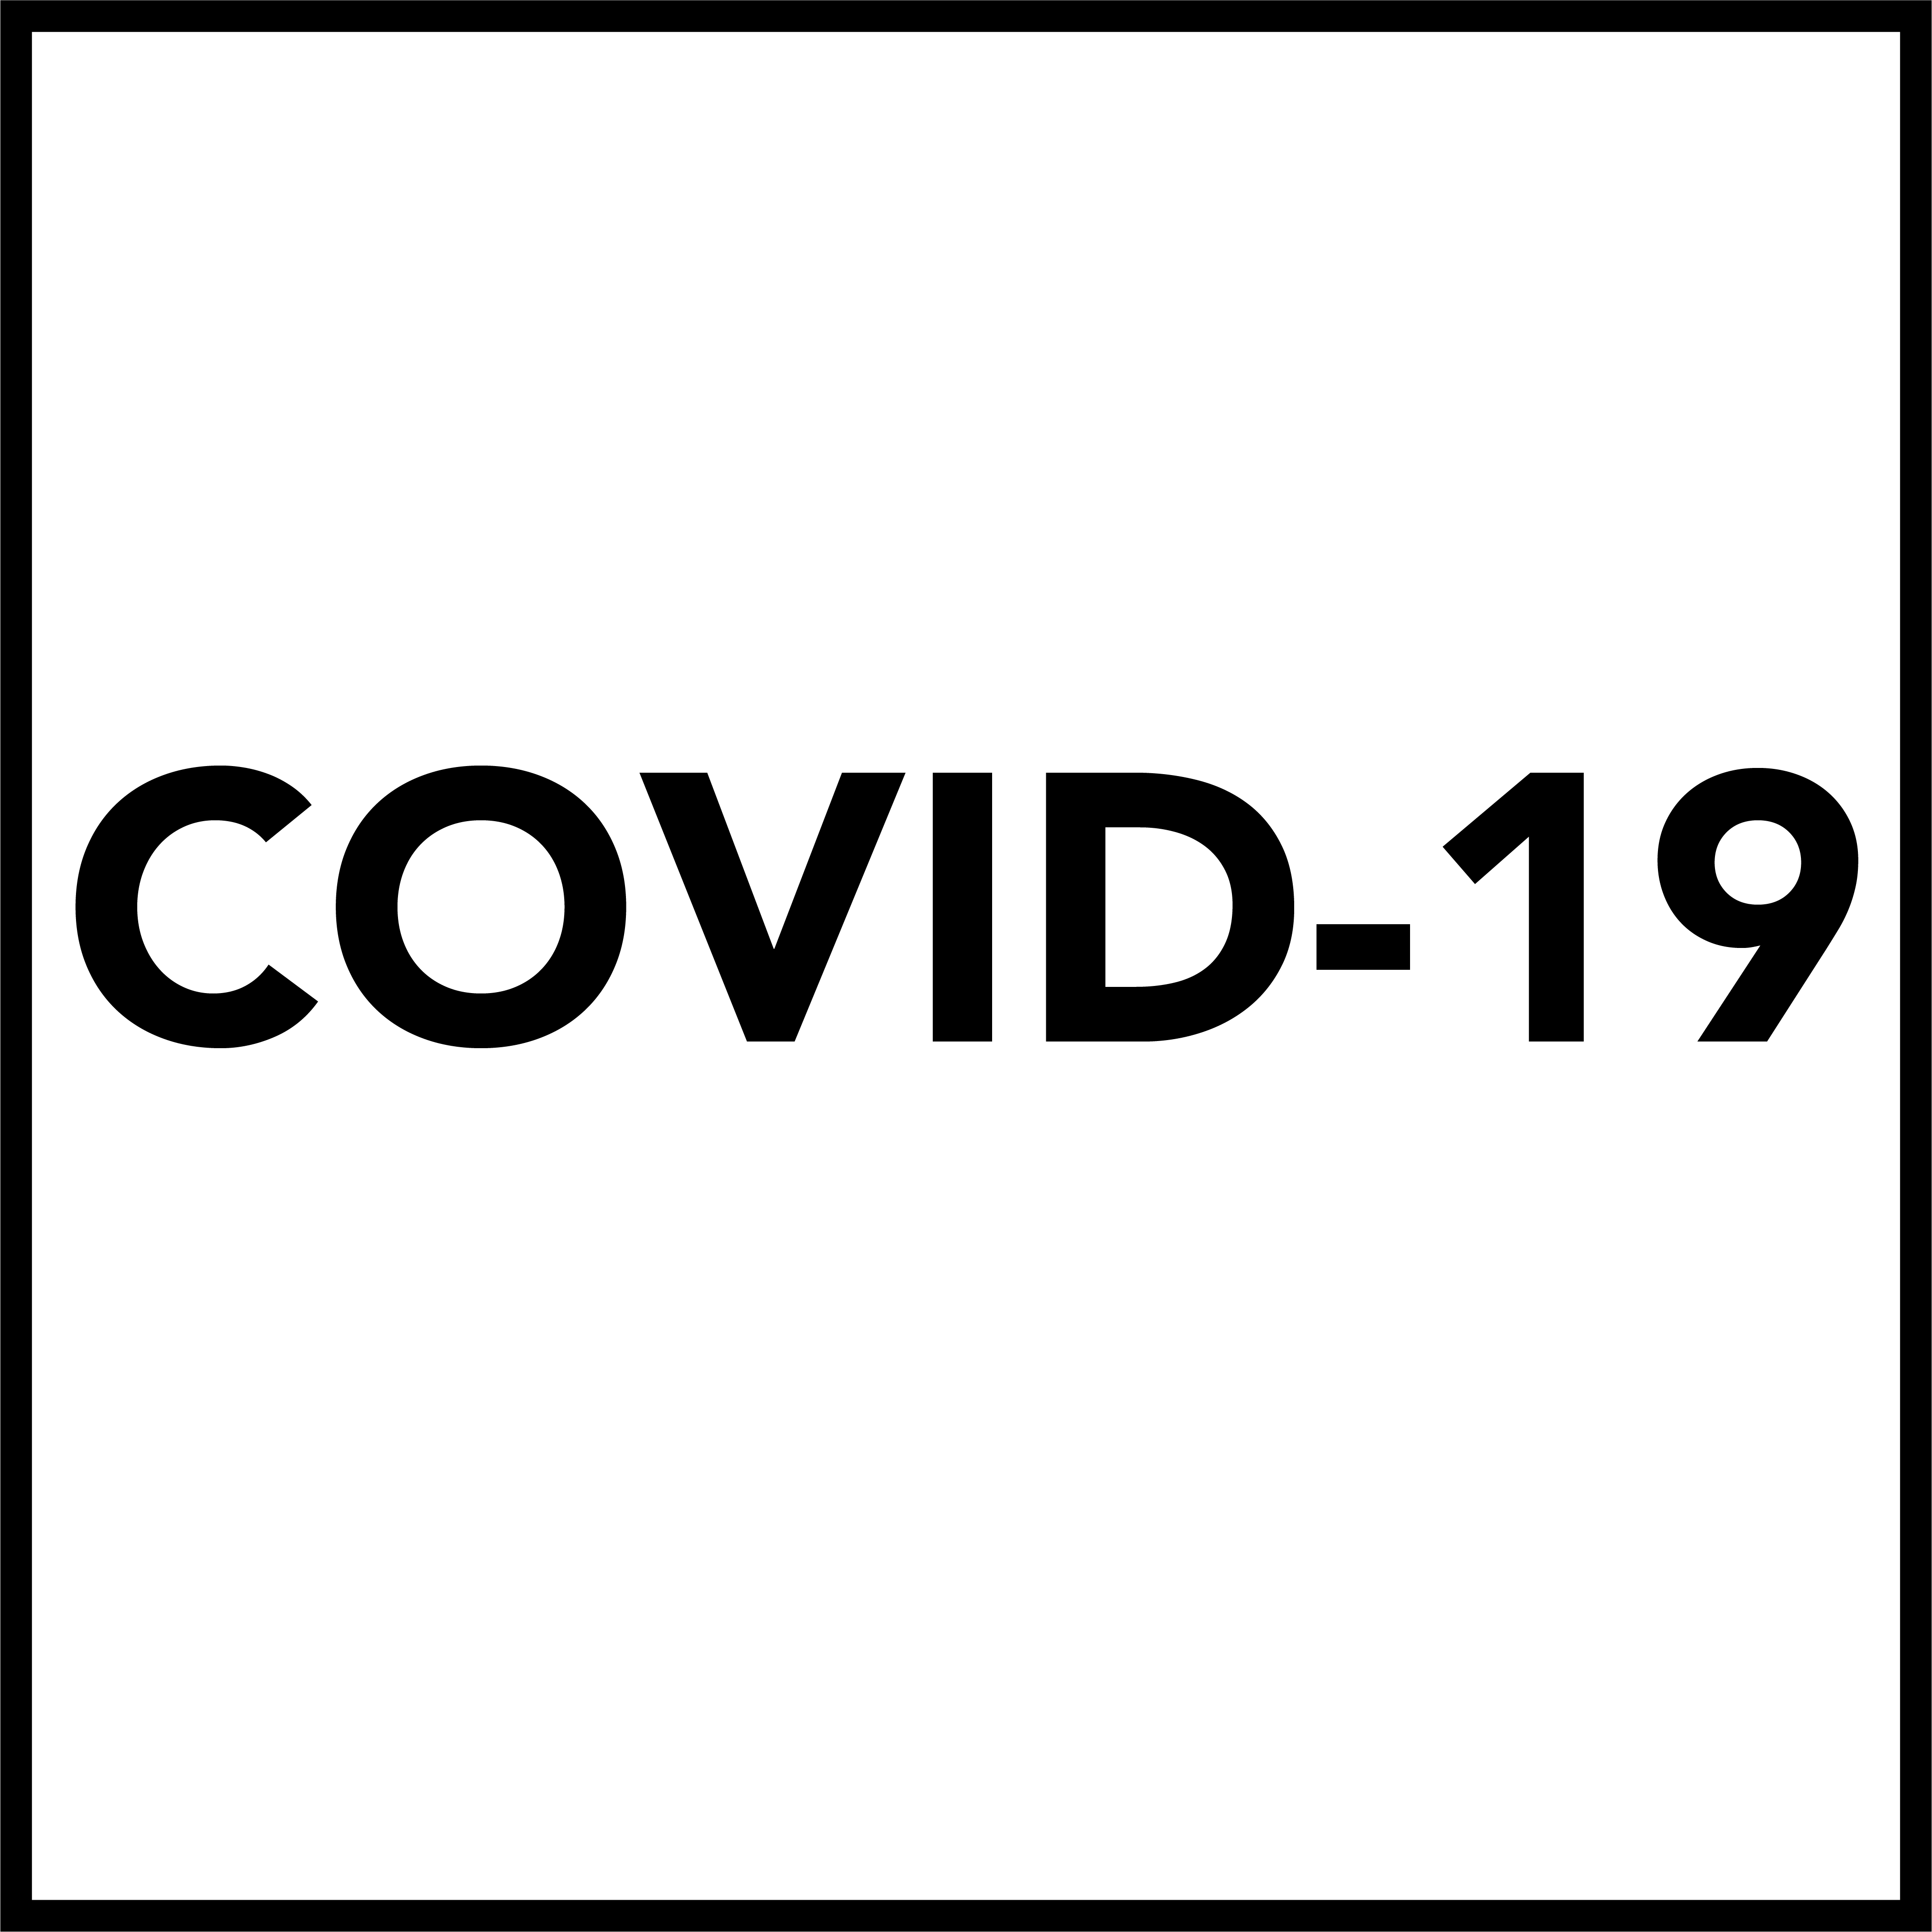 Partnership with Chan Zuckerberg Initiative to Profile Pediatric COVID-19 Announced